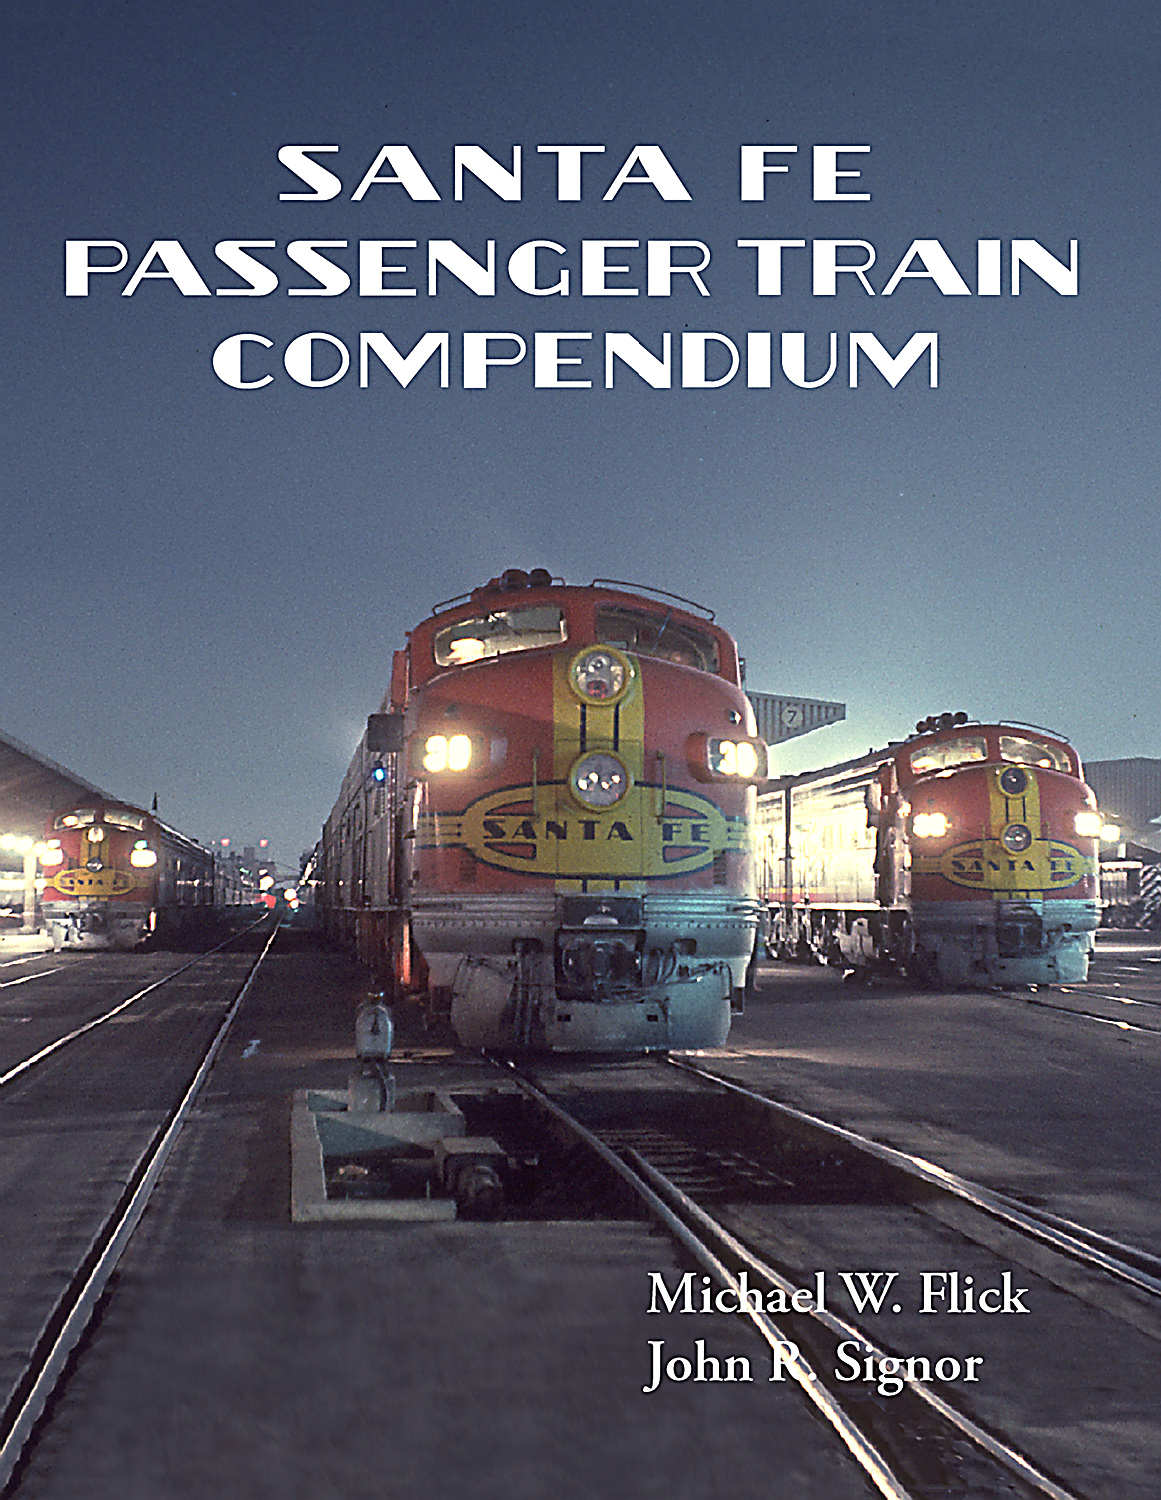 santa fe passenger train compendium by michael flick and john signor